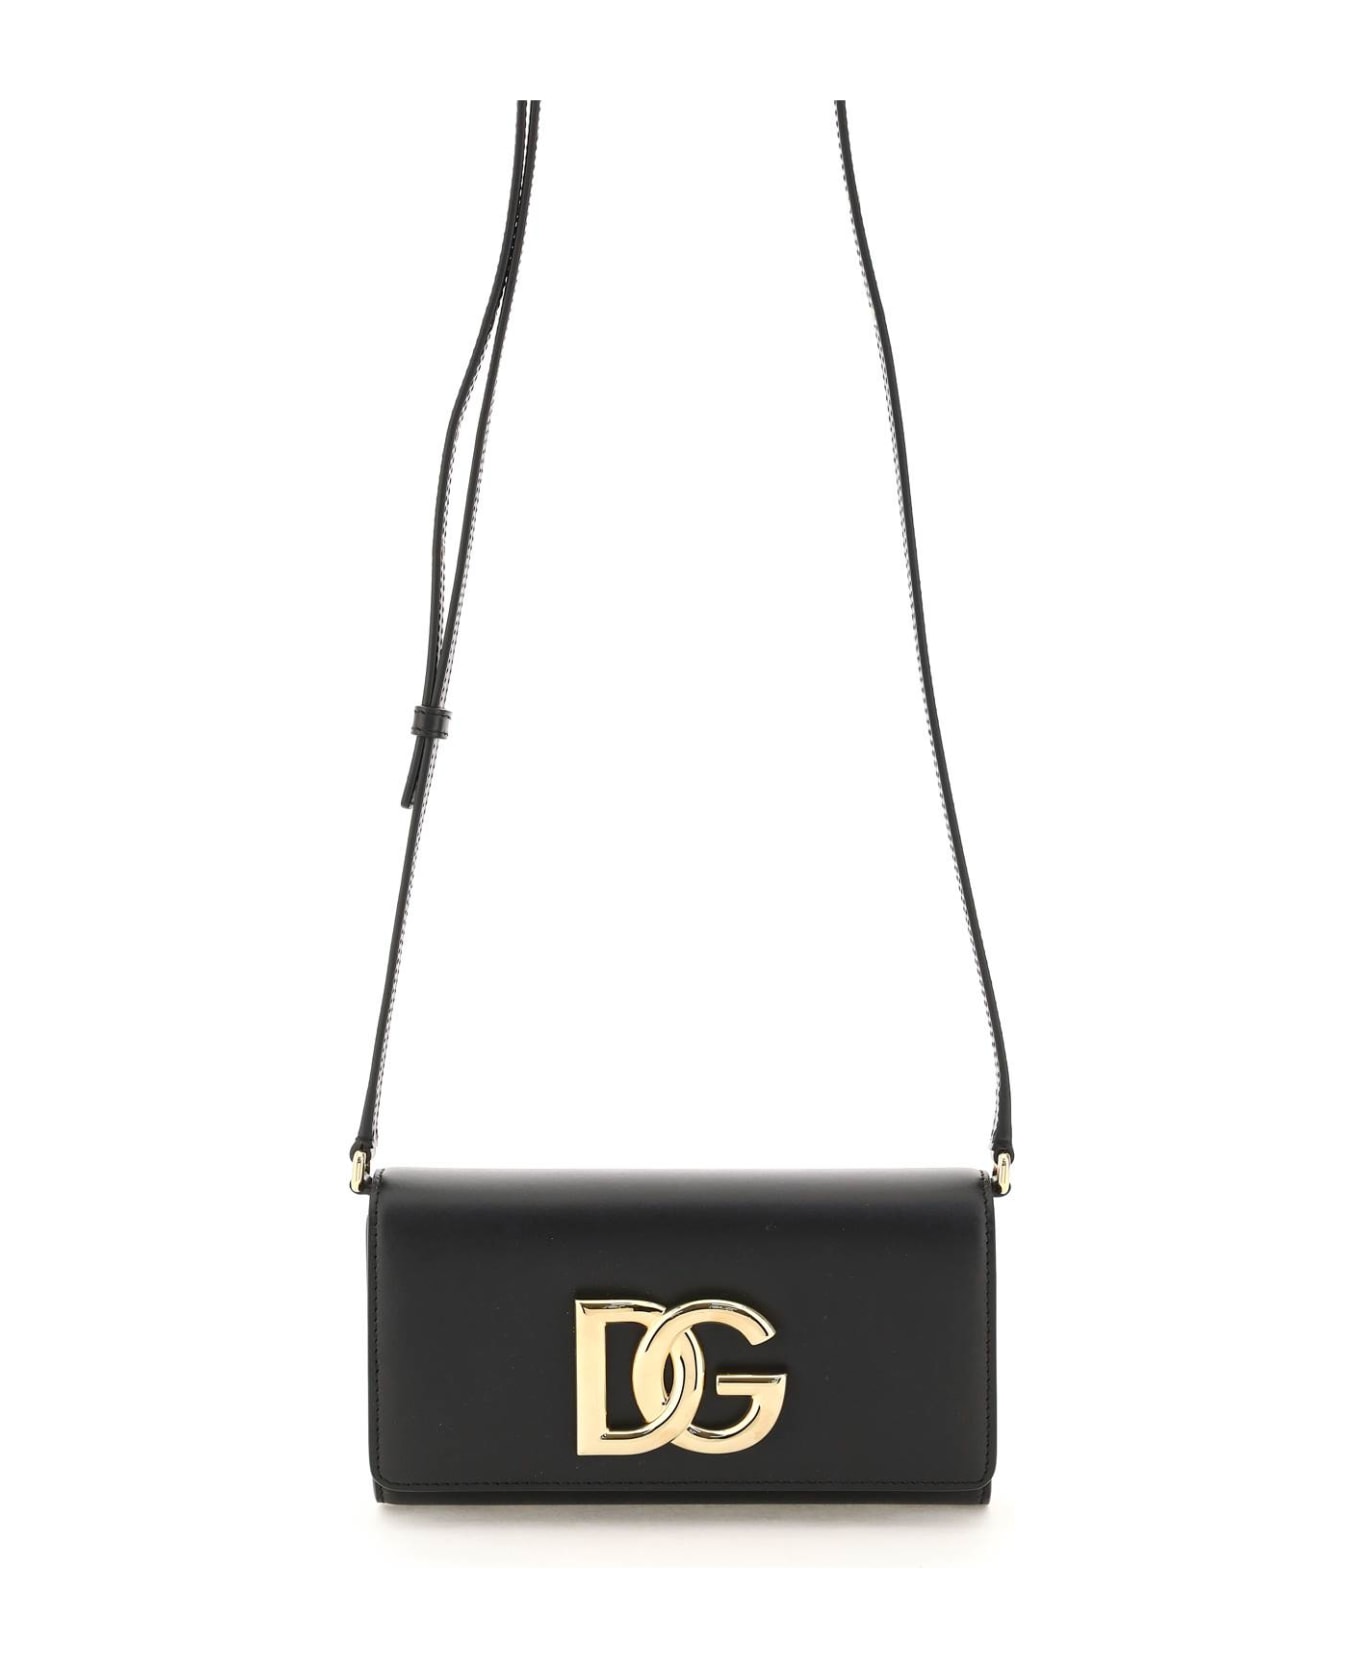 Dolce & Gabbana 3.5 Leather Clutch - Black